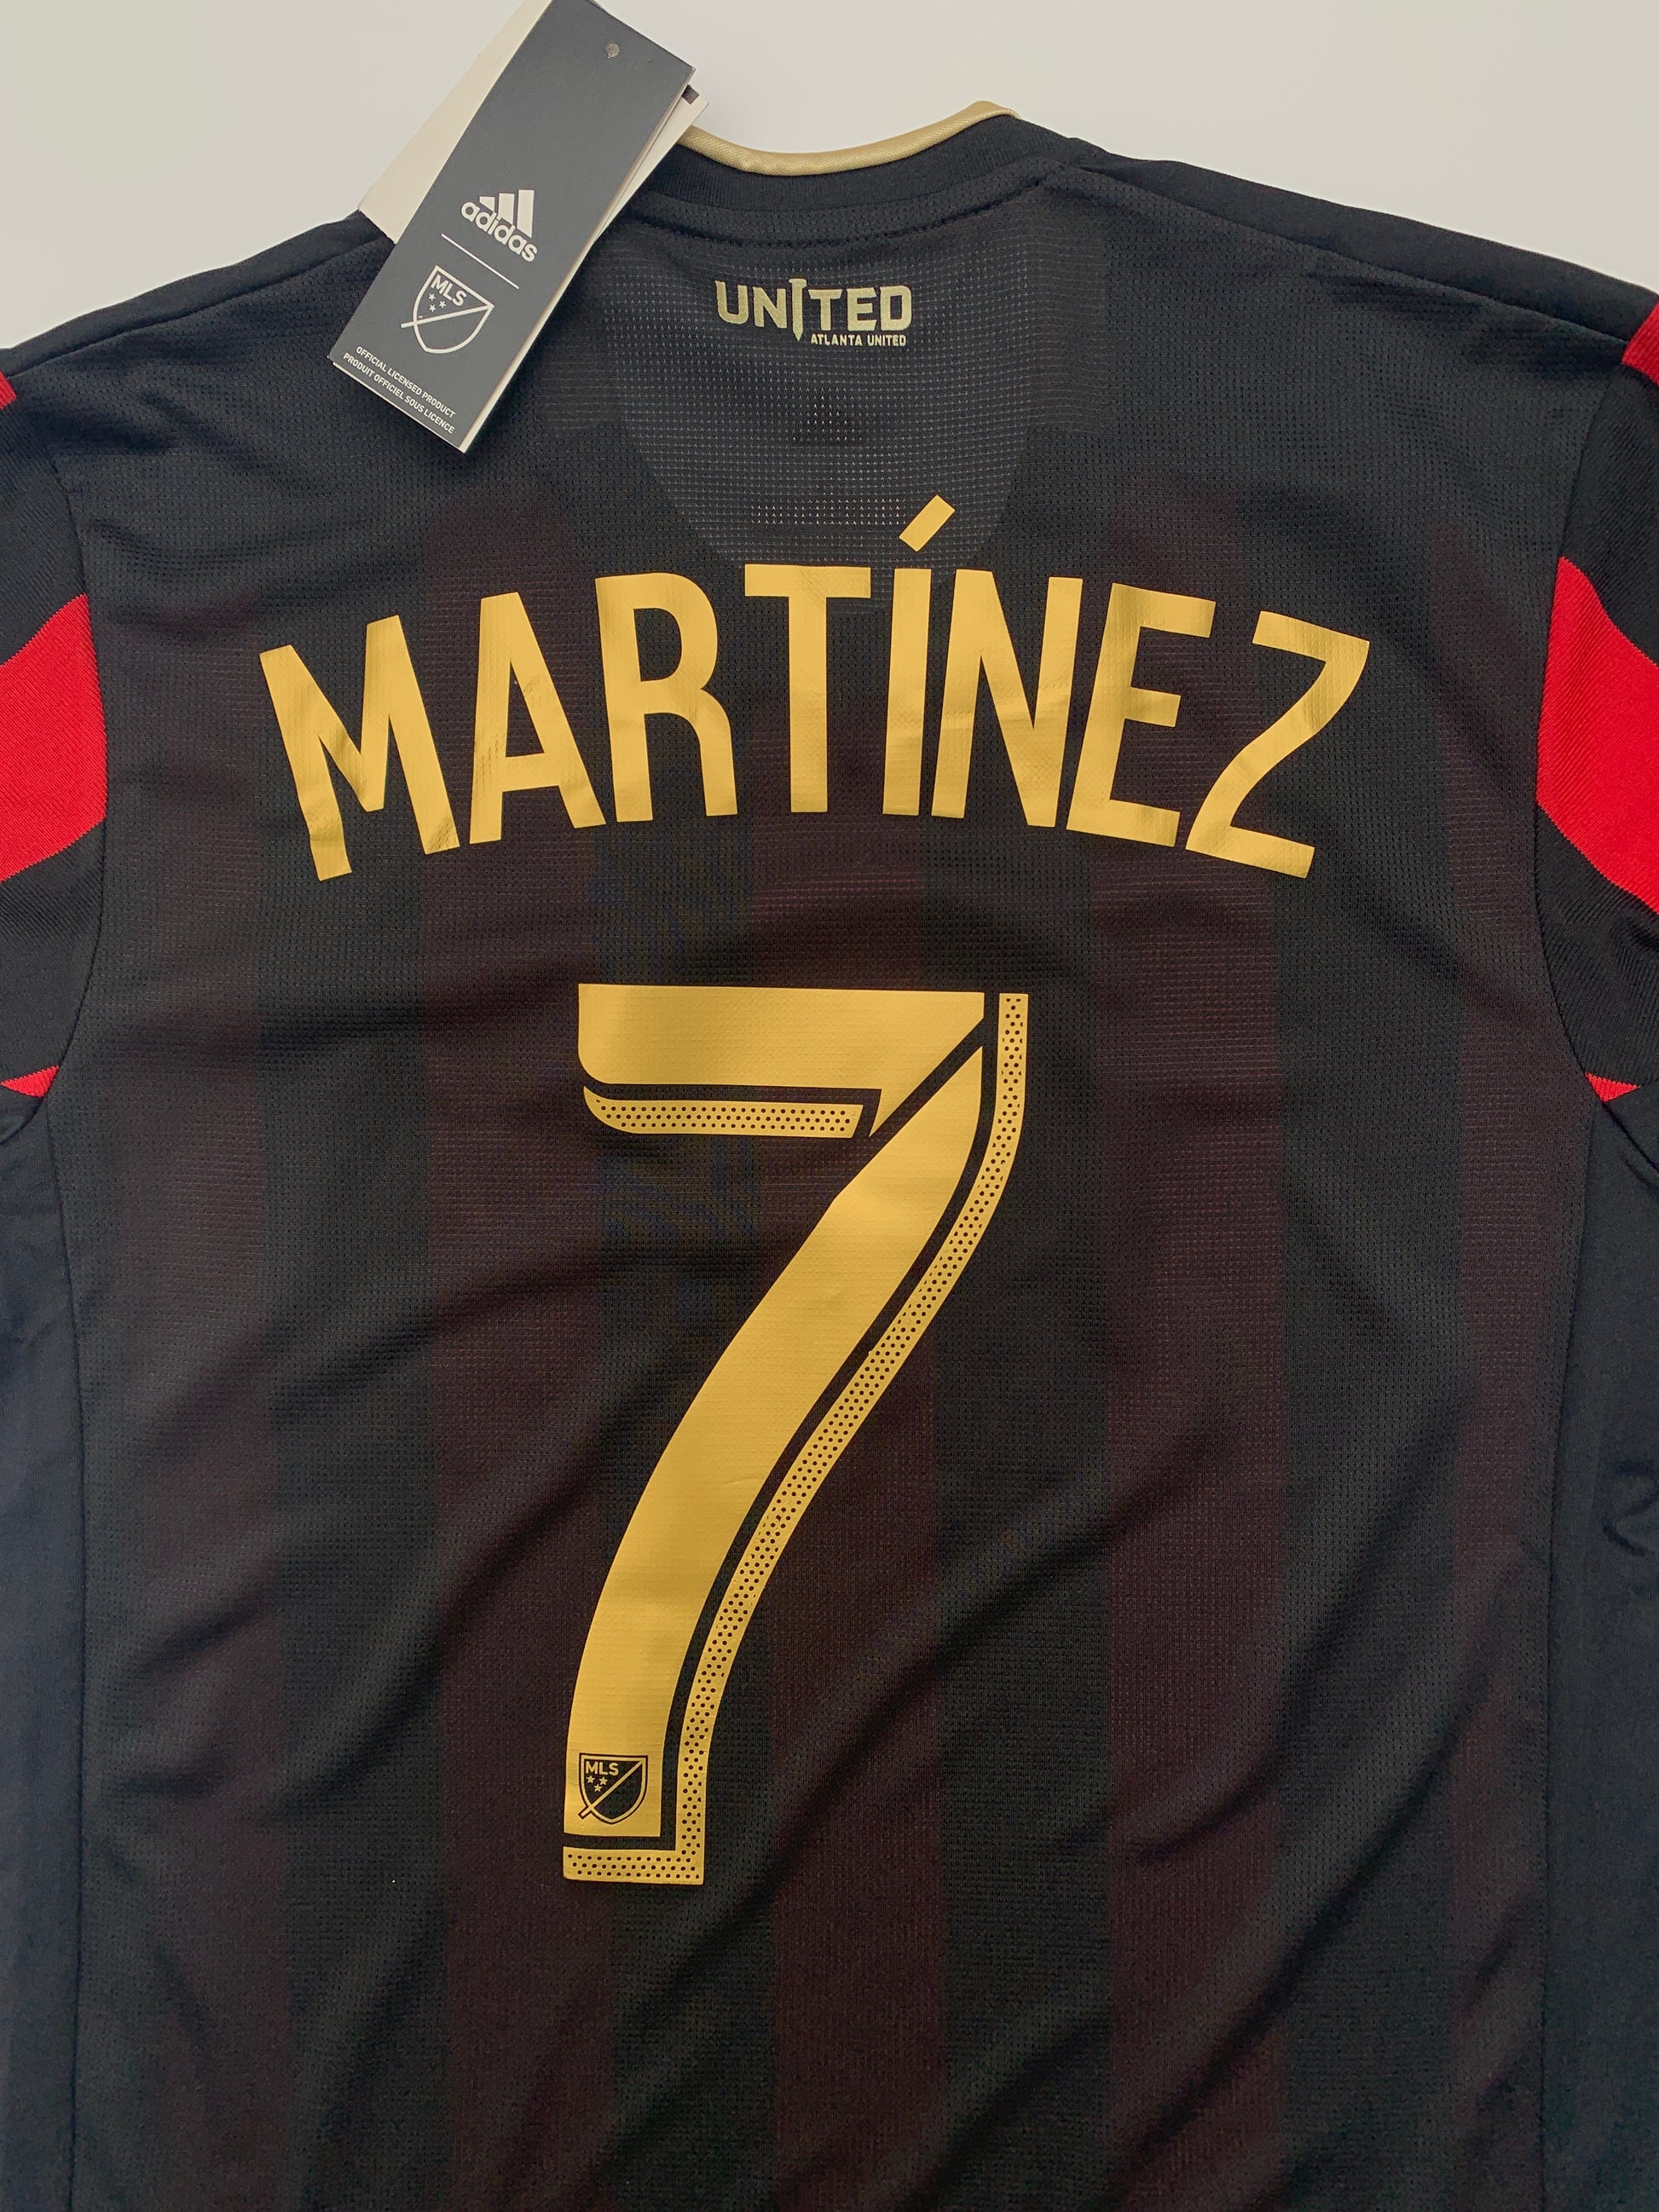 Josef Martinez Jerseys, Josef Martinez Shirts, Apparel, Gear